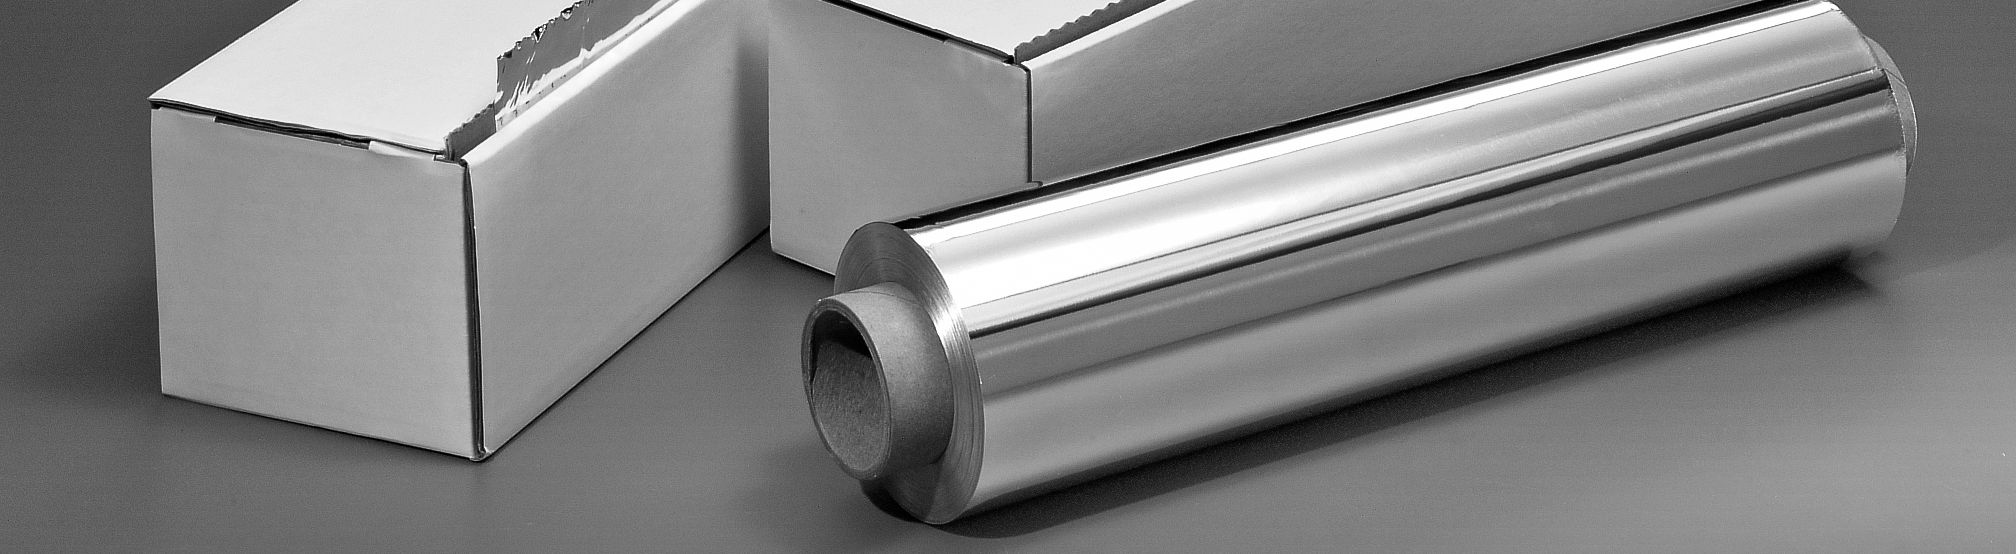 Laborfolie aus Aluminium, Dicke 0,030 mm (30 Âµm), Breite 500 mm, RollenlÃ¤nge 100 m